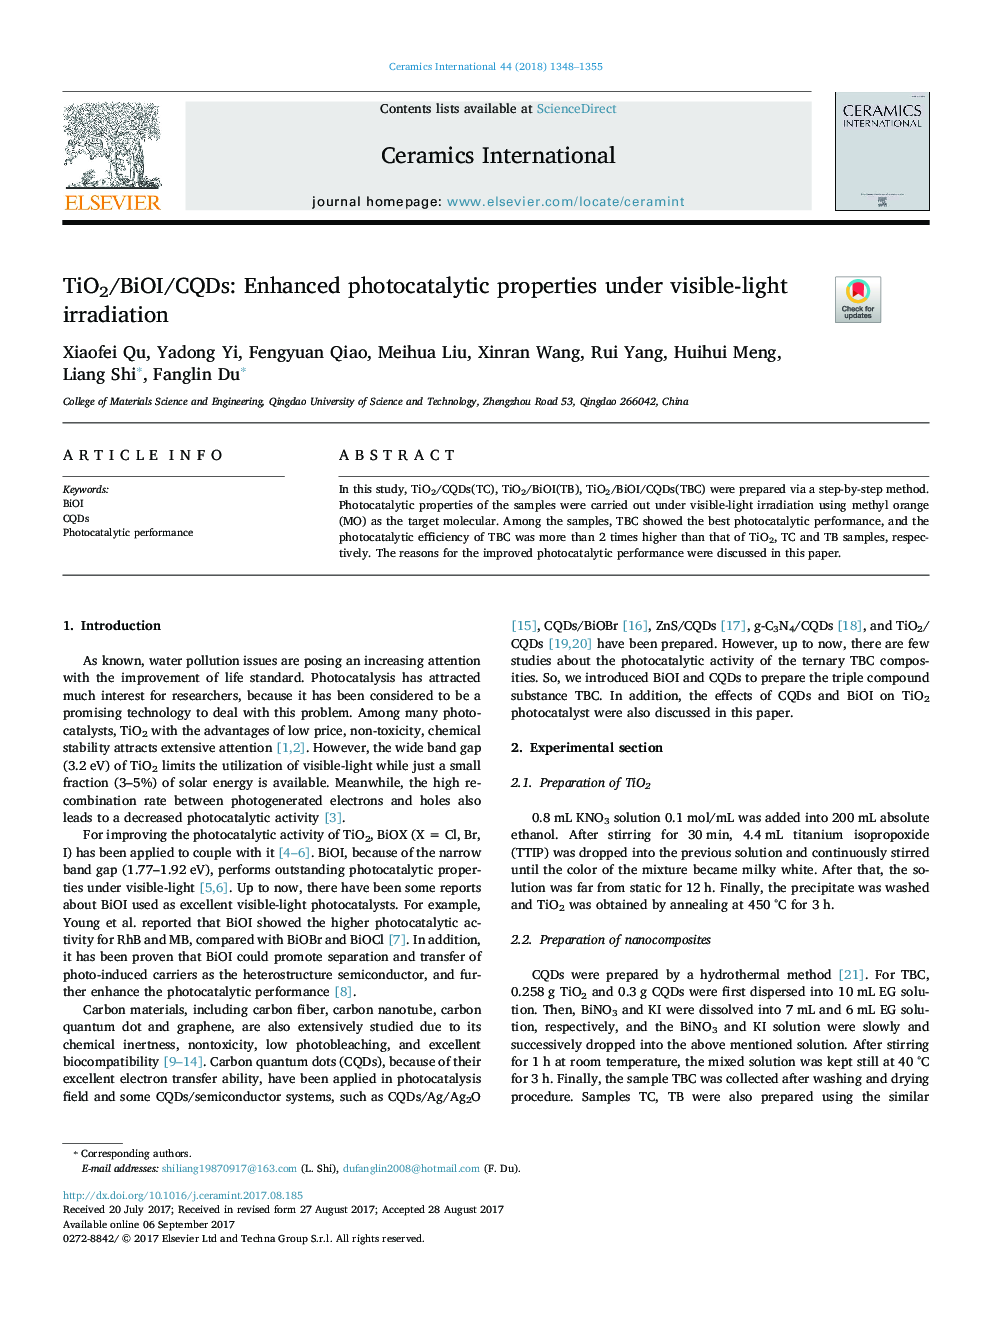 TiO2/BiOI/CQDs: Enhanced photocatalytic properties under visible-light irradiation